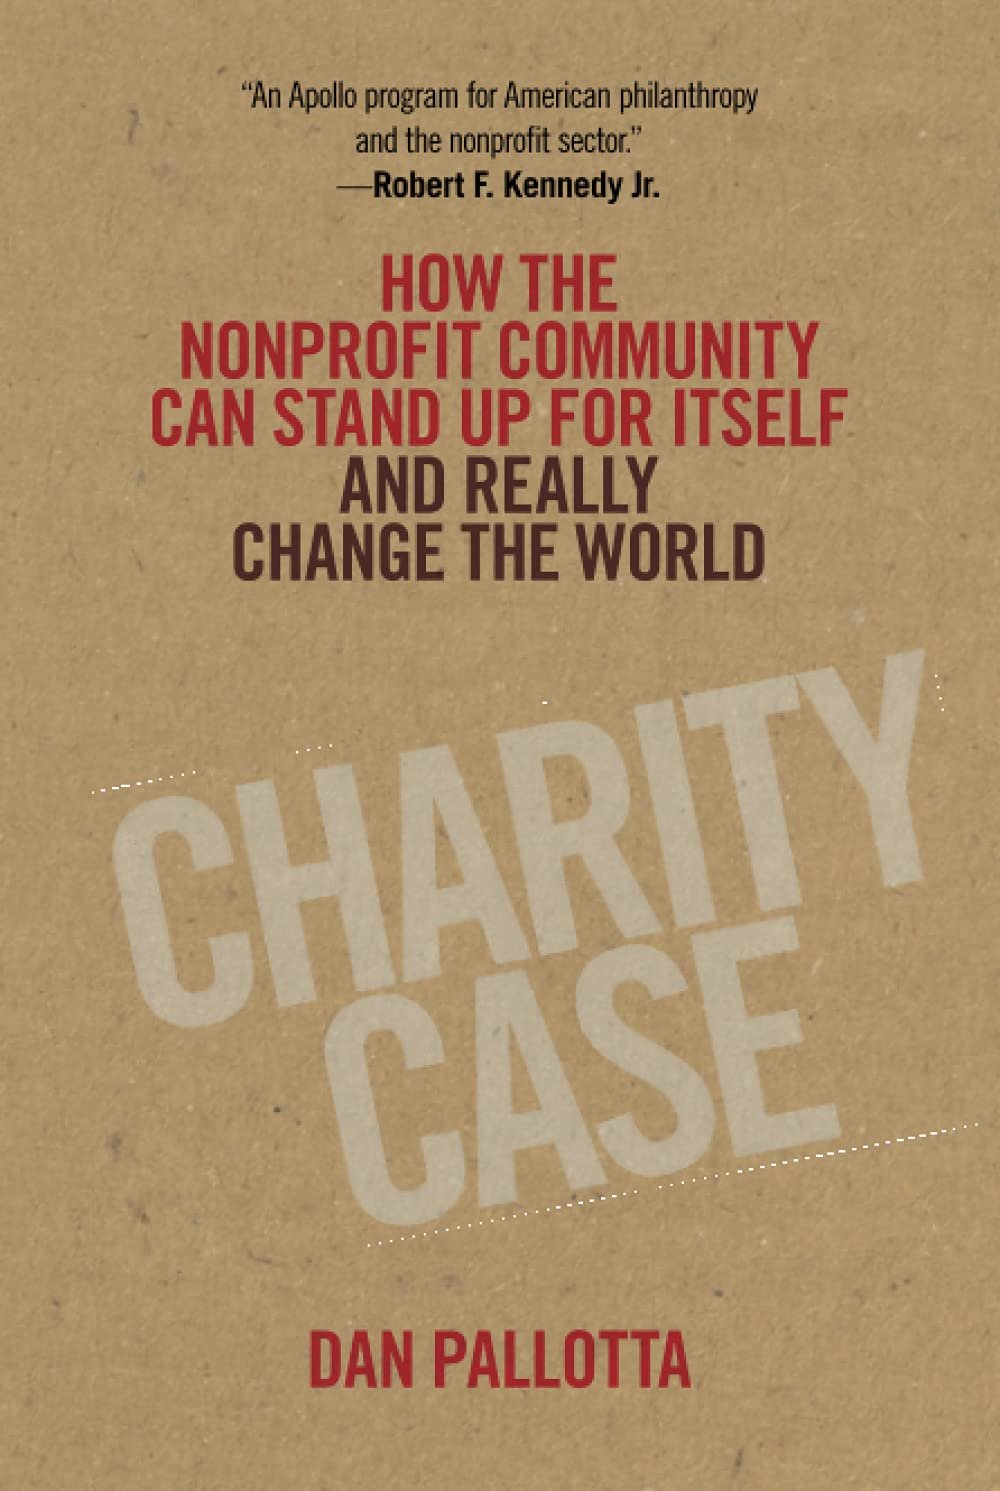 charity+Case.jpg